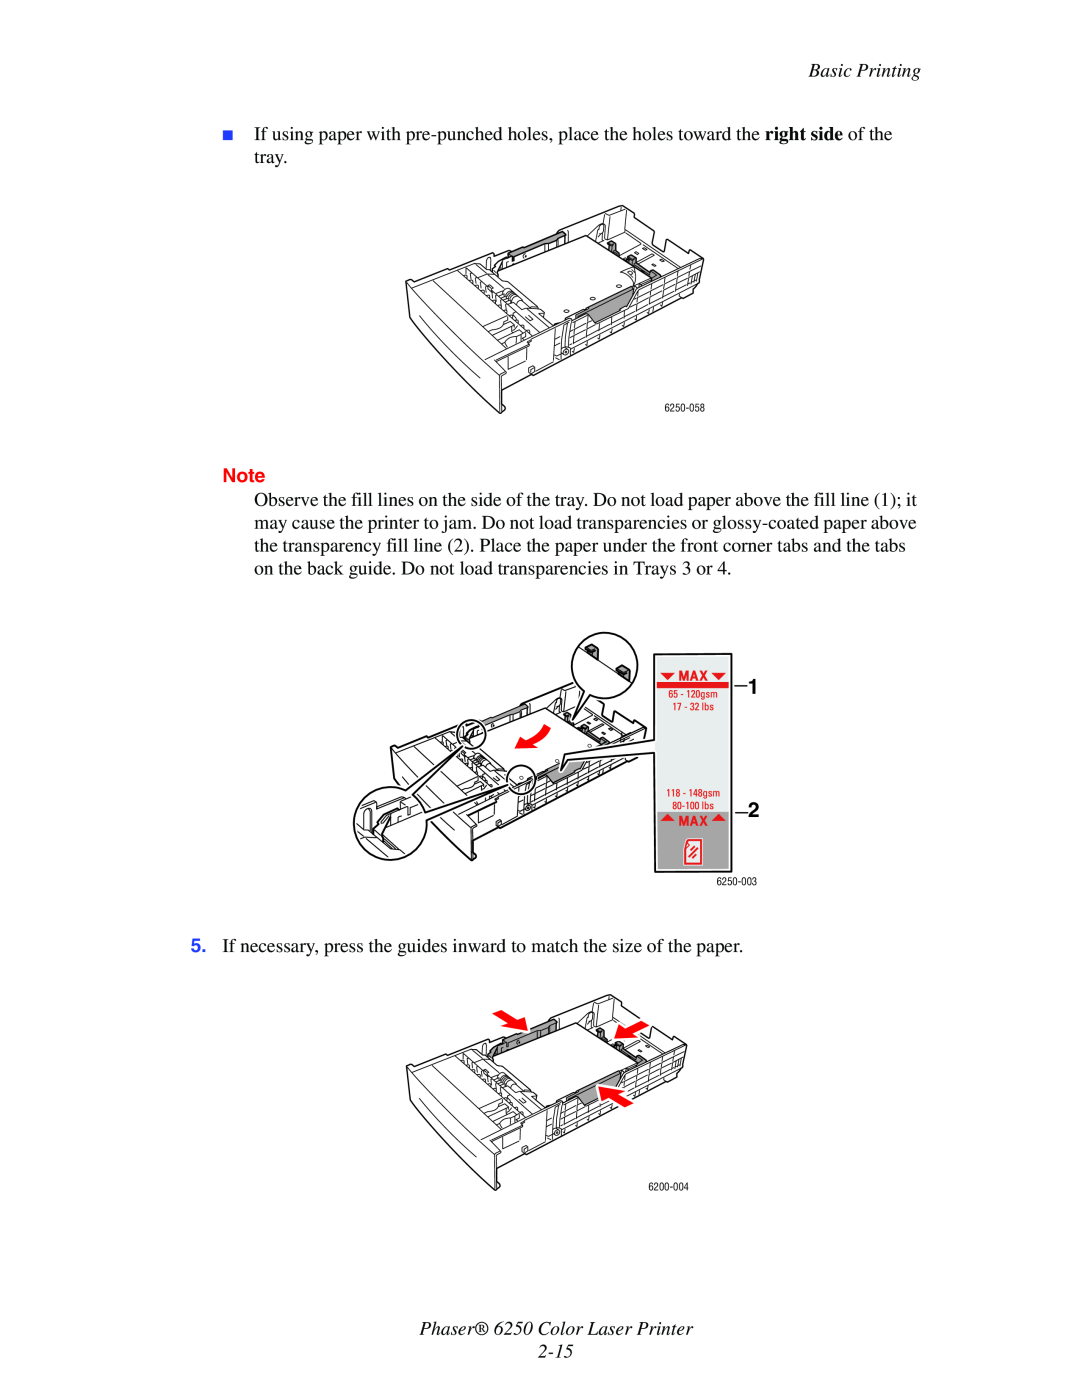 Xerox manual Phaser 6250 Color Laser Printer 2-15, Basic Printing 